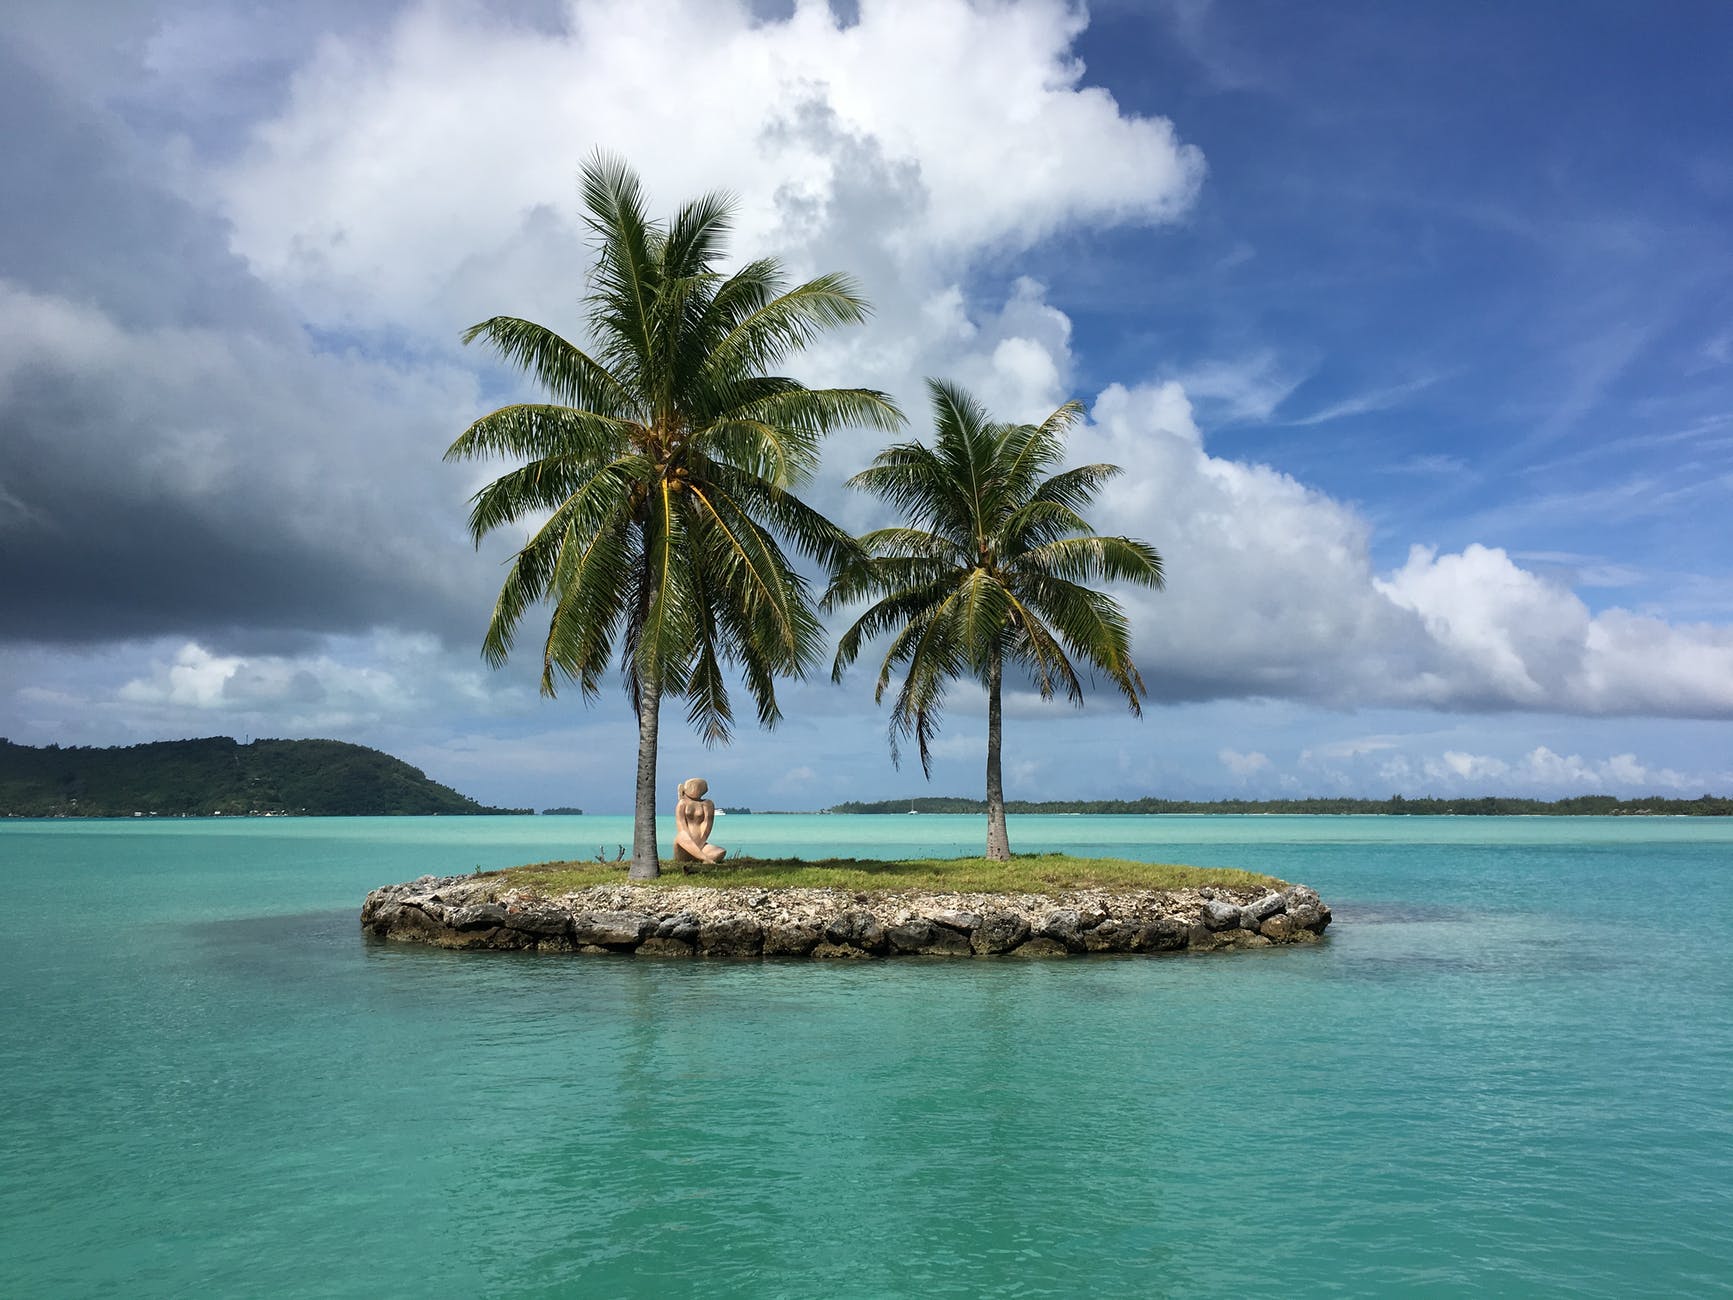 coconut trees planted on island